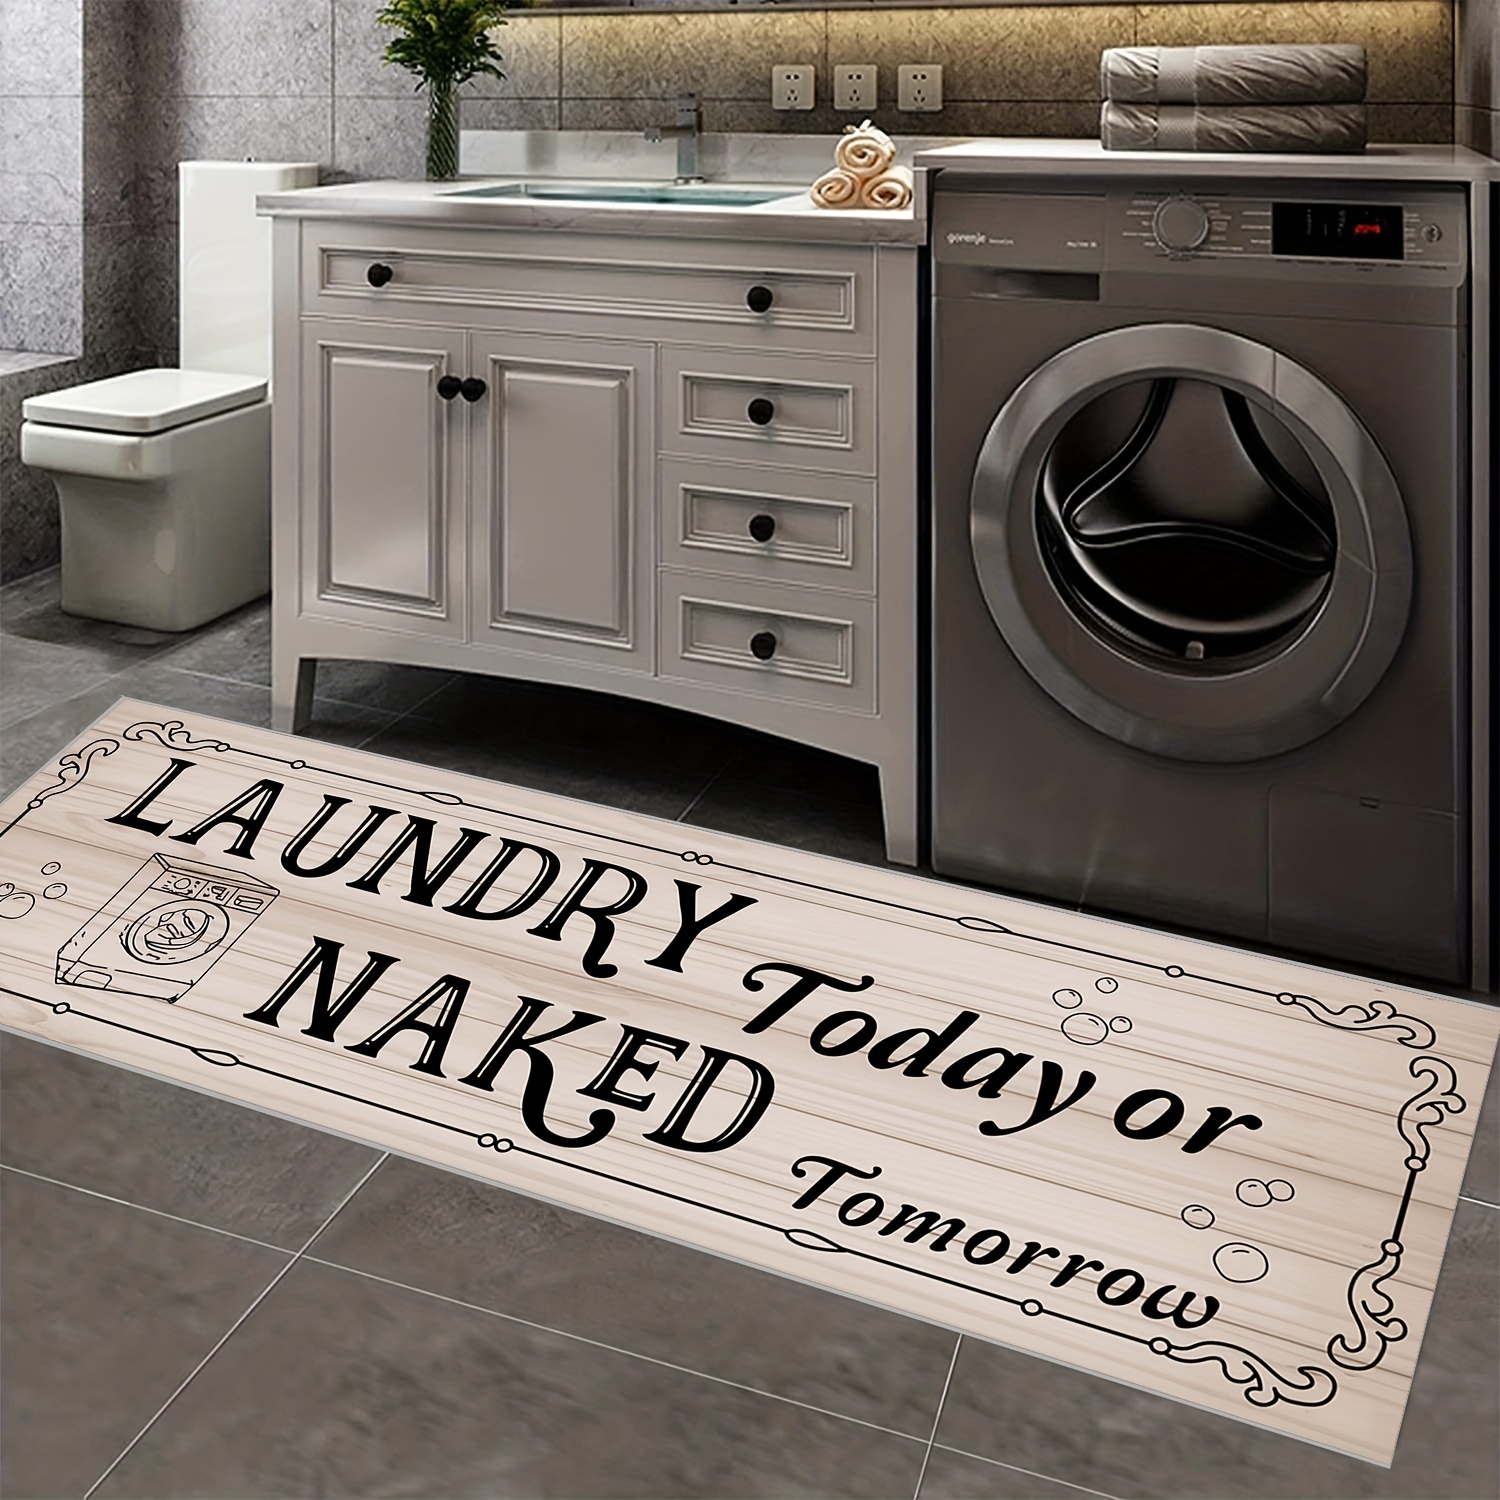 

1pc Laundry Room Rugs Runner, Light Non Slip Waterproof Laundry Mats For Laundry Room Decor, Washable Floor Laundry Rug For Laundry Room, Mudroom, Kitchen, Washroom